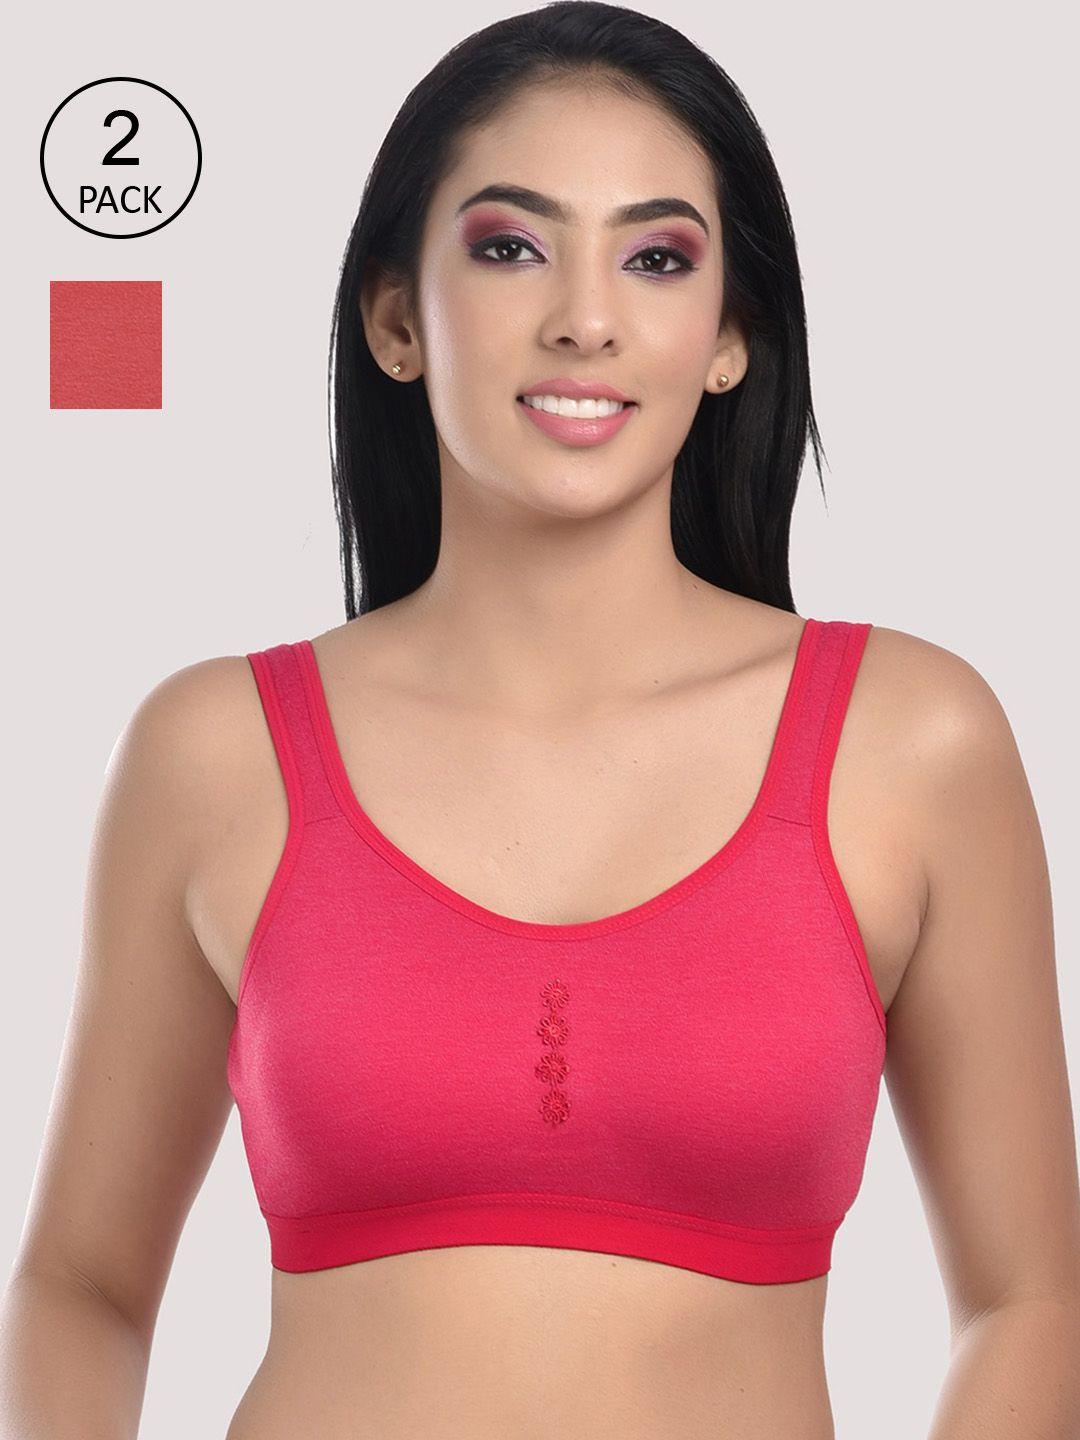 styfun women red & pink solid cotton blend sports bra